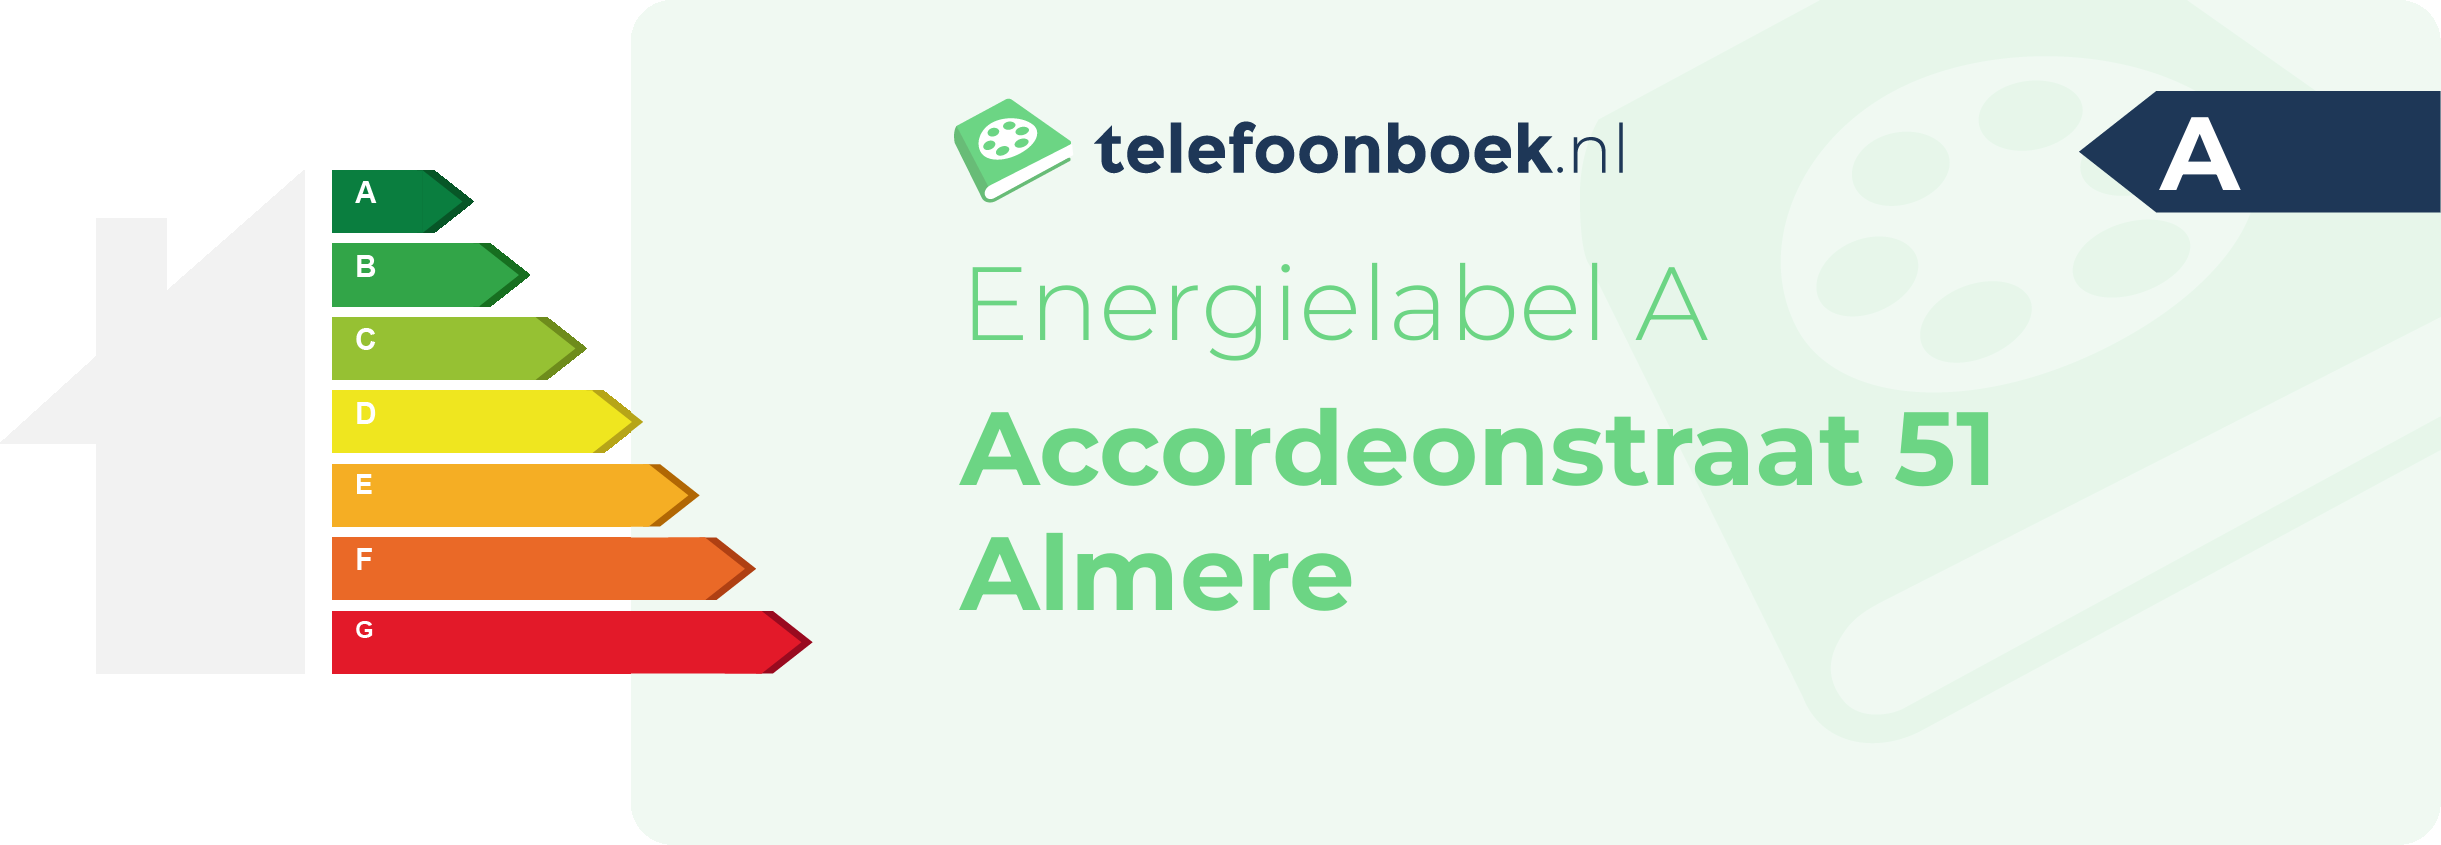 Energielabel Accordeonstraat 51 Almere